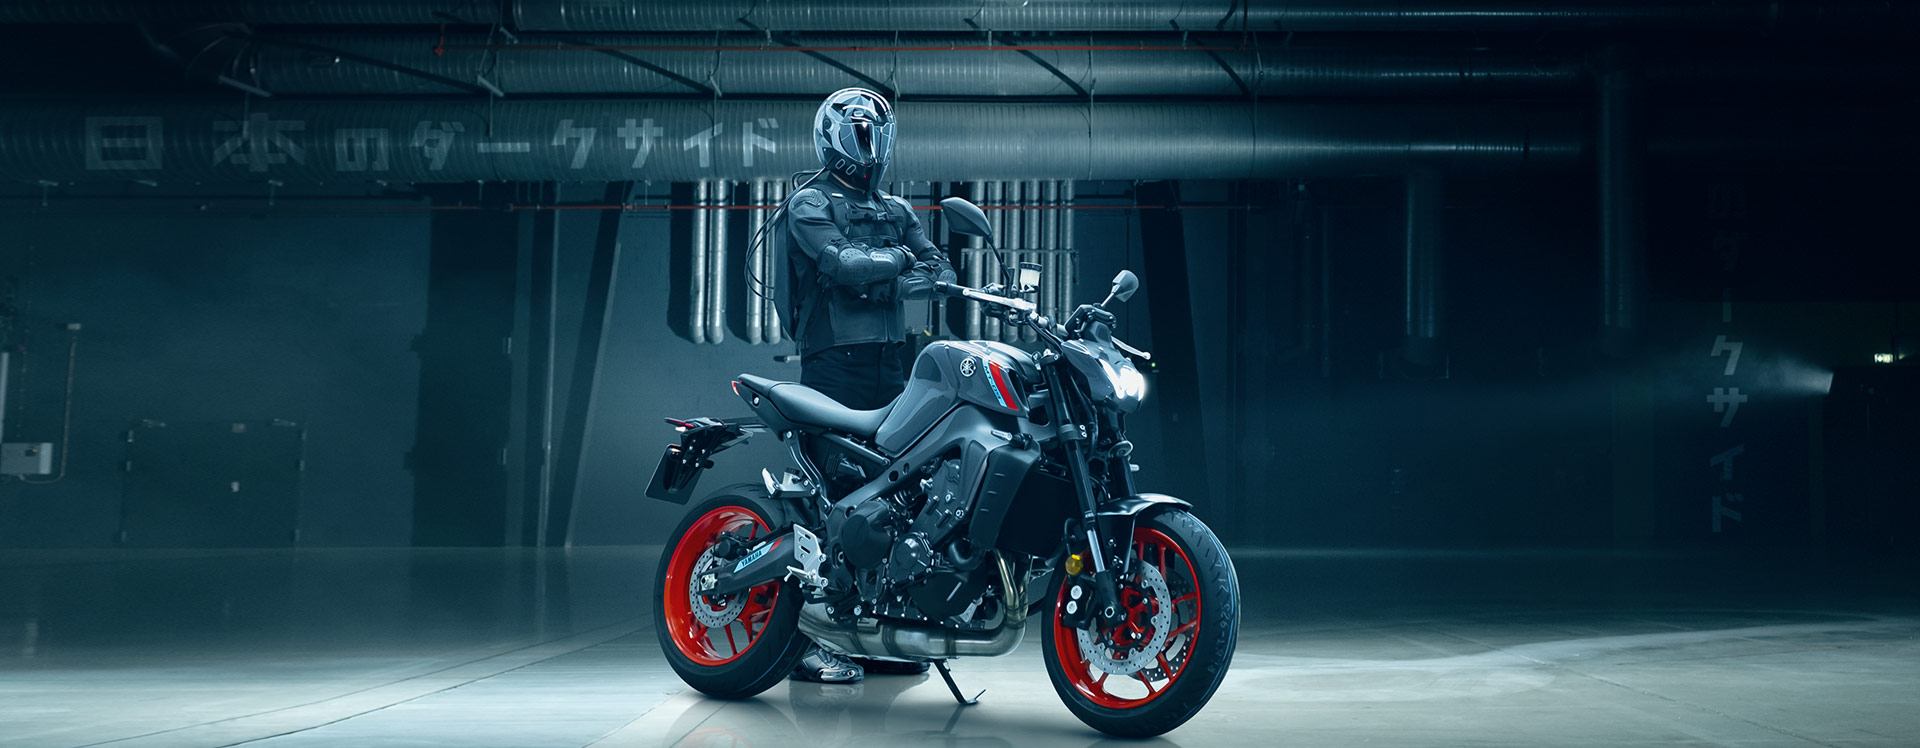 Yamaha MT-09 e gamma Hyper Naked, le novità 2019 